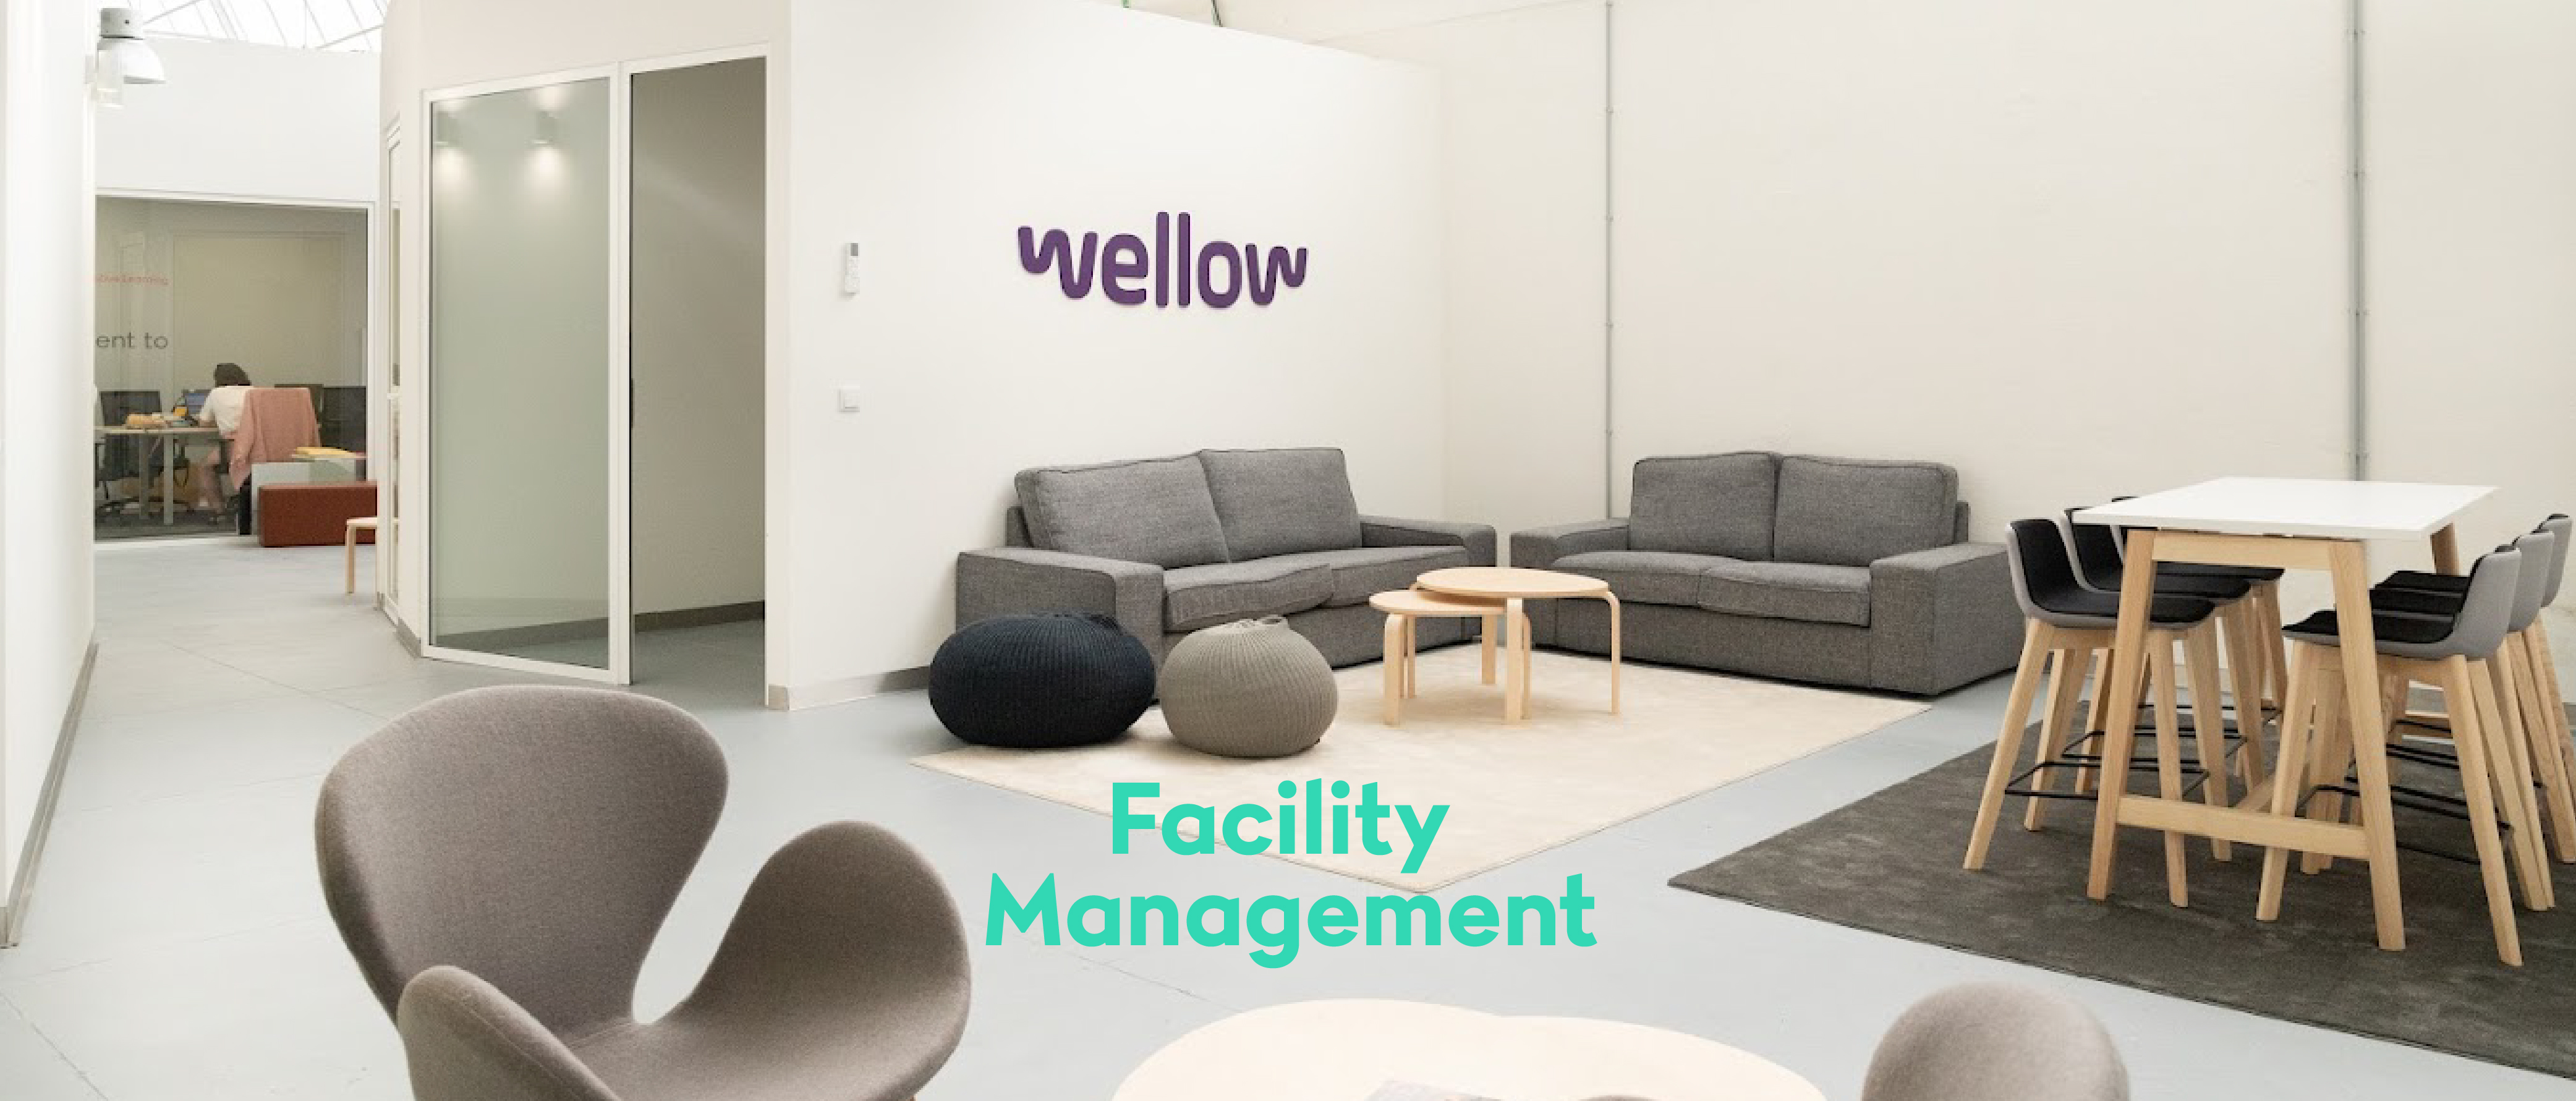 Wellow Blog Facility Management b